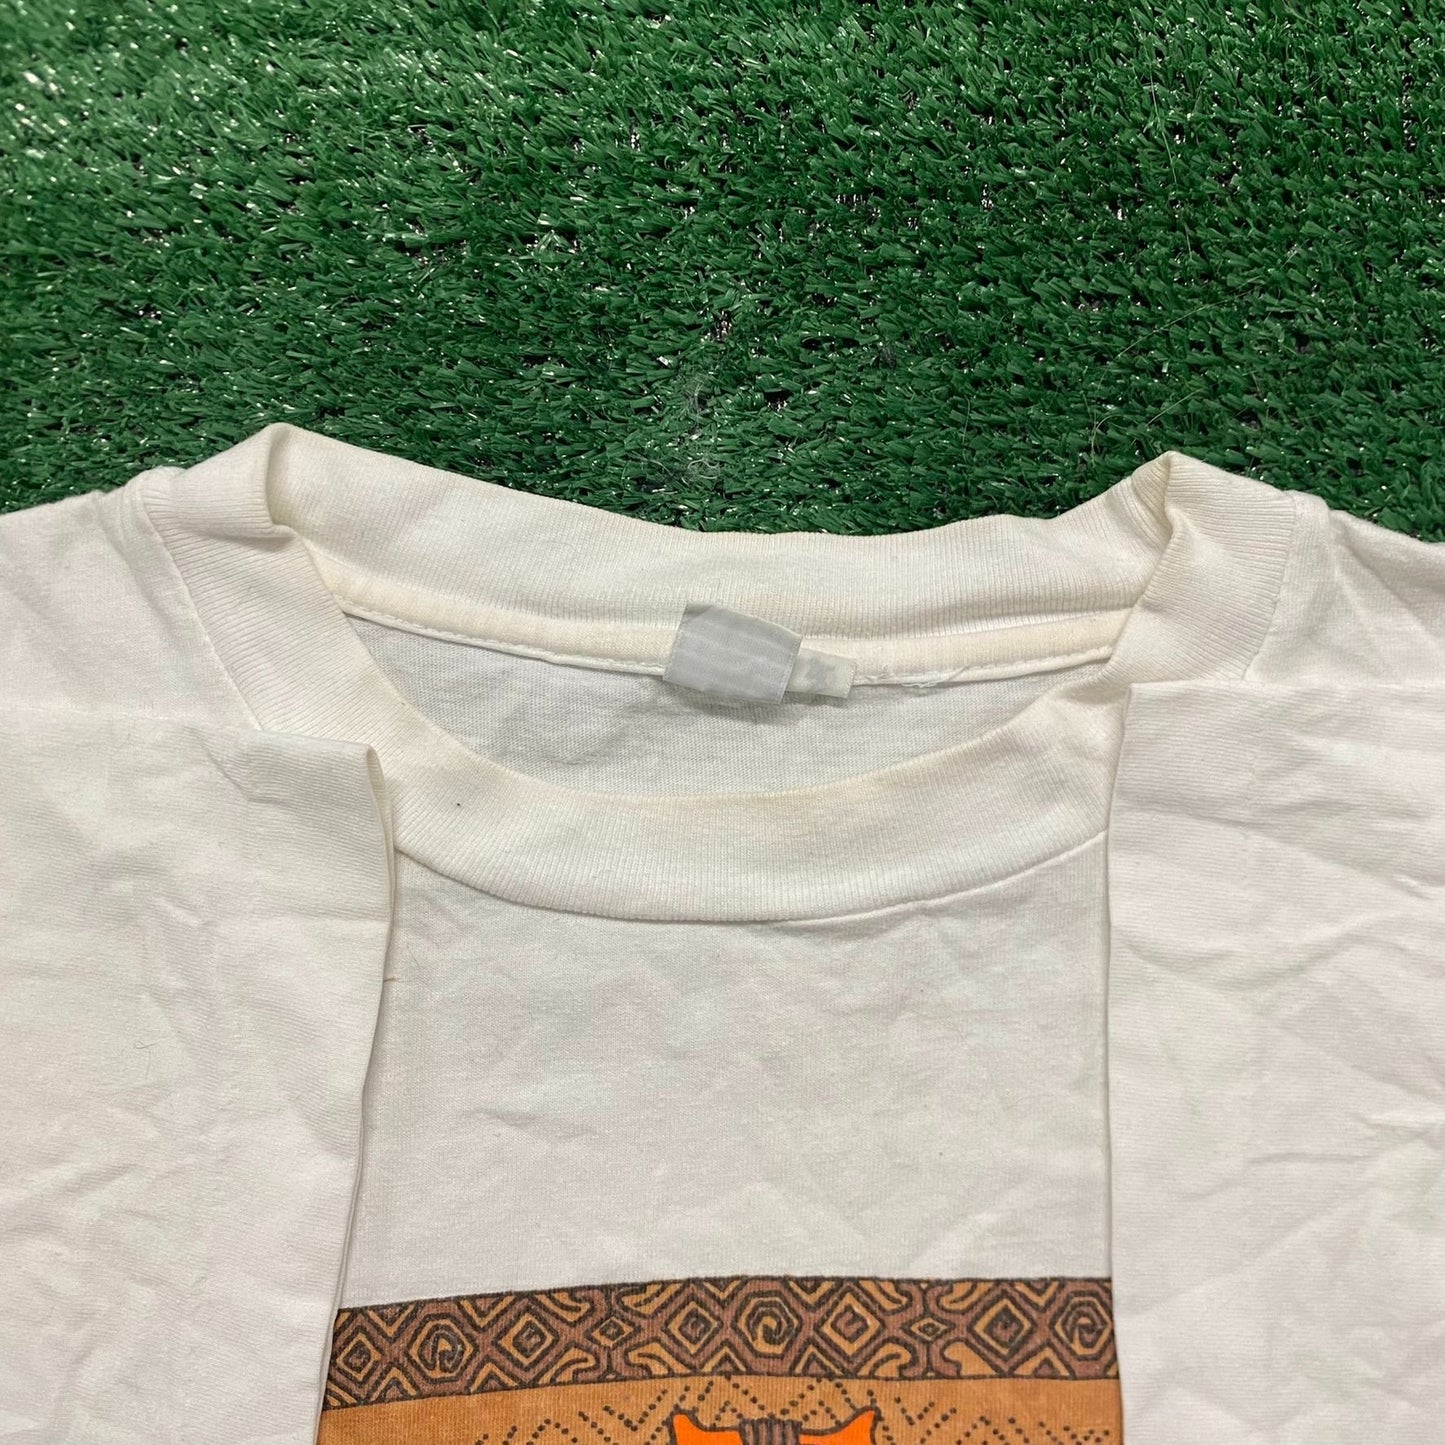 Vintage 90s Native Tribal Art Single Stitch Tourist T-Shirt